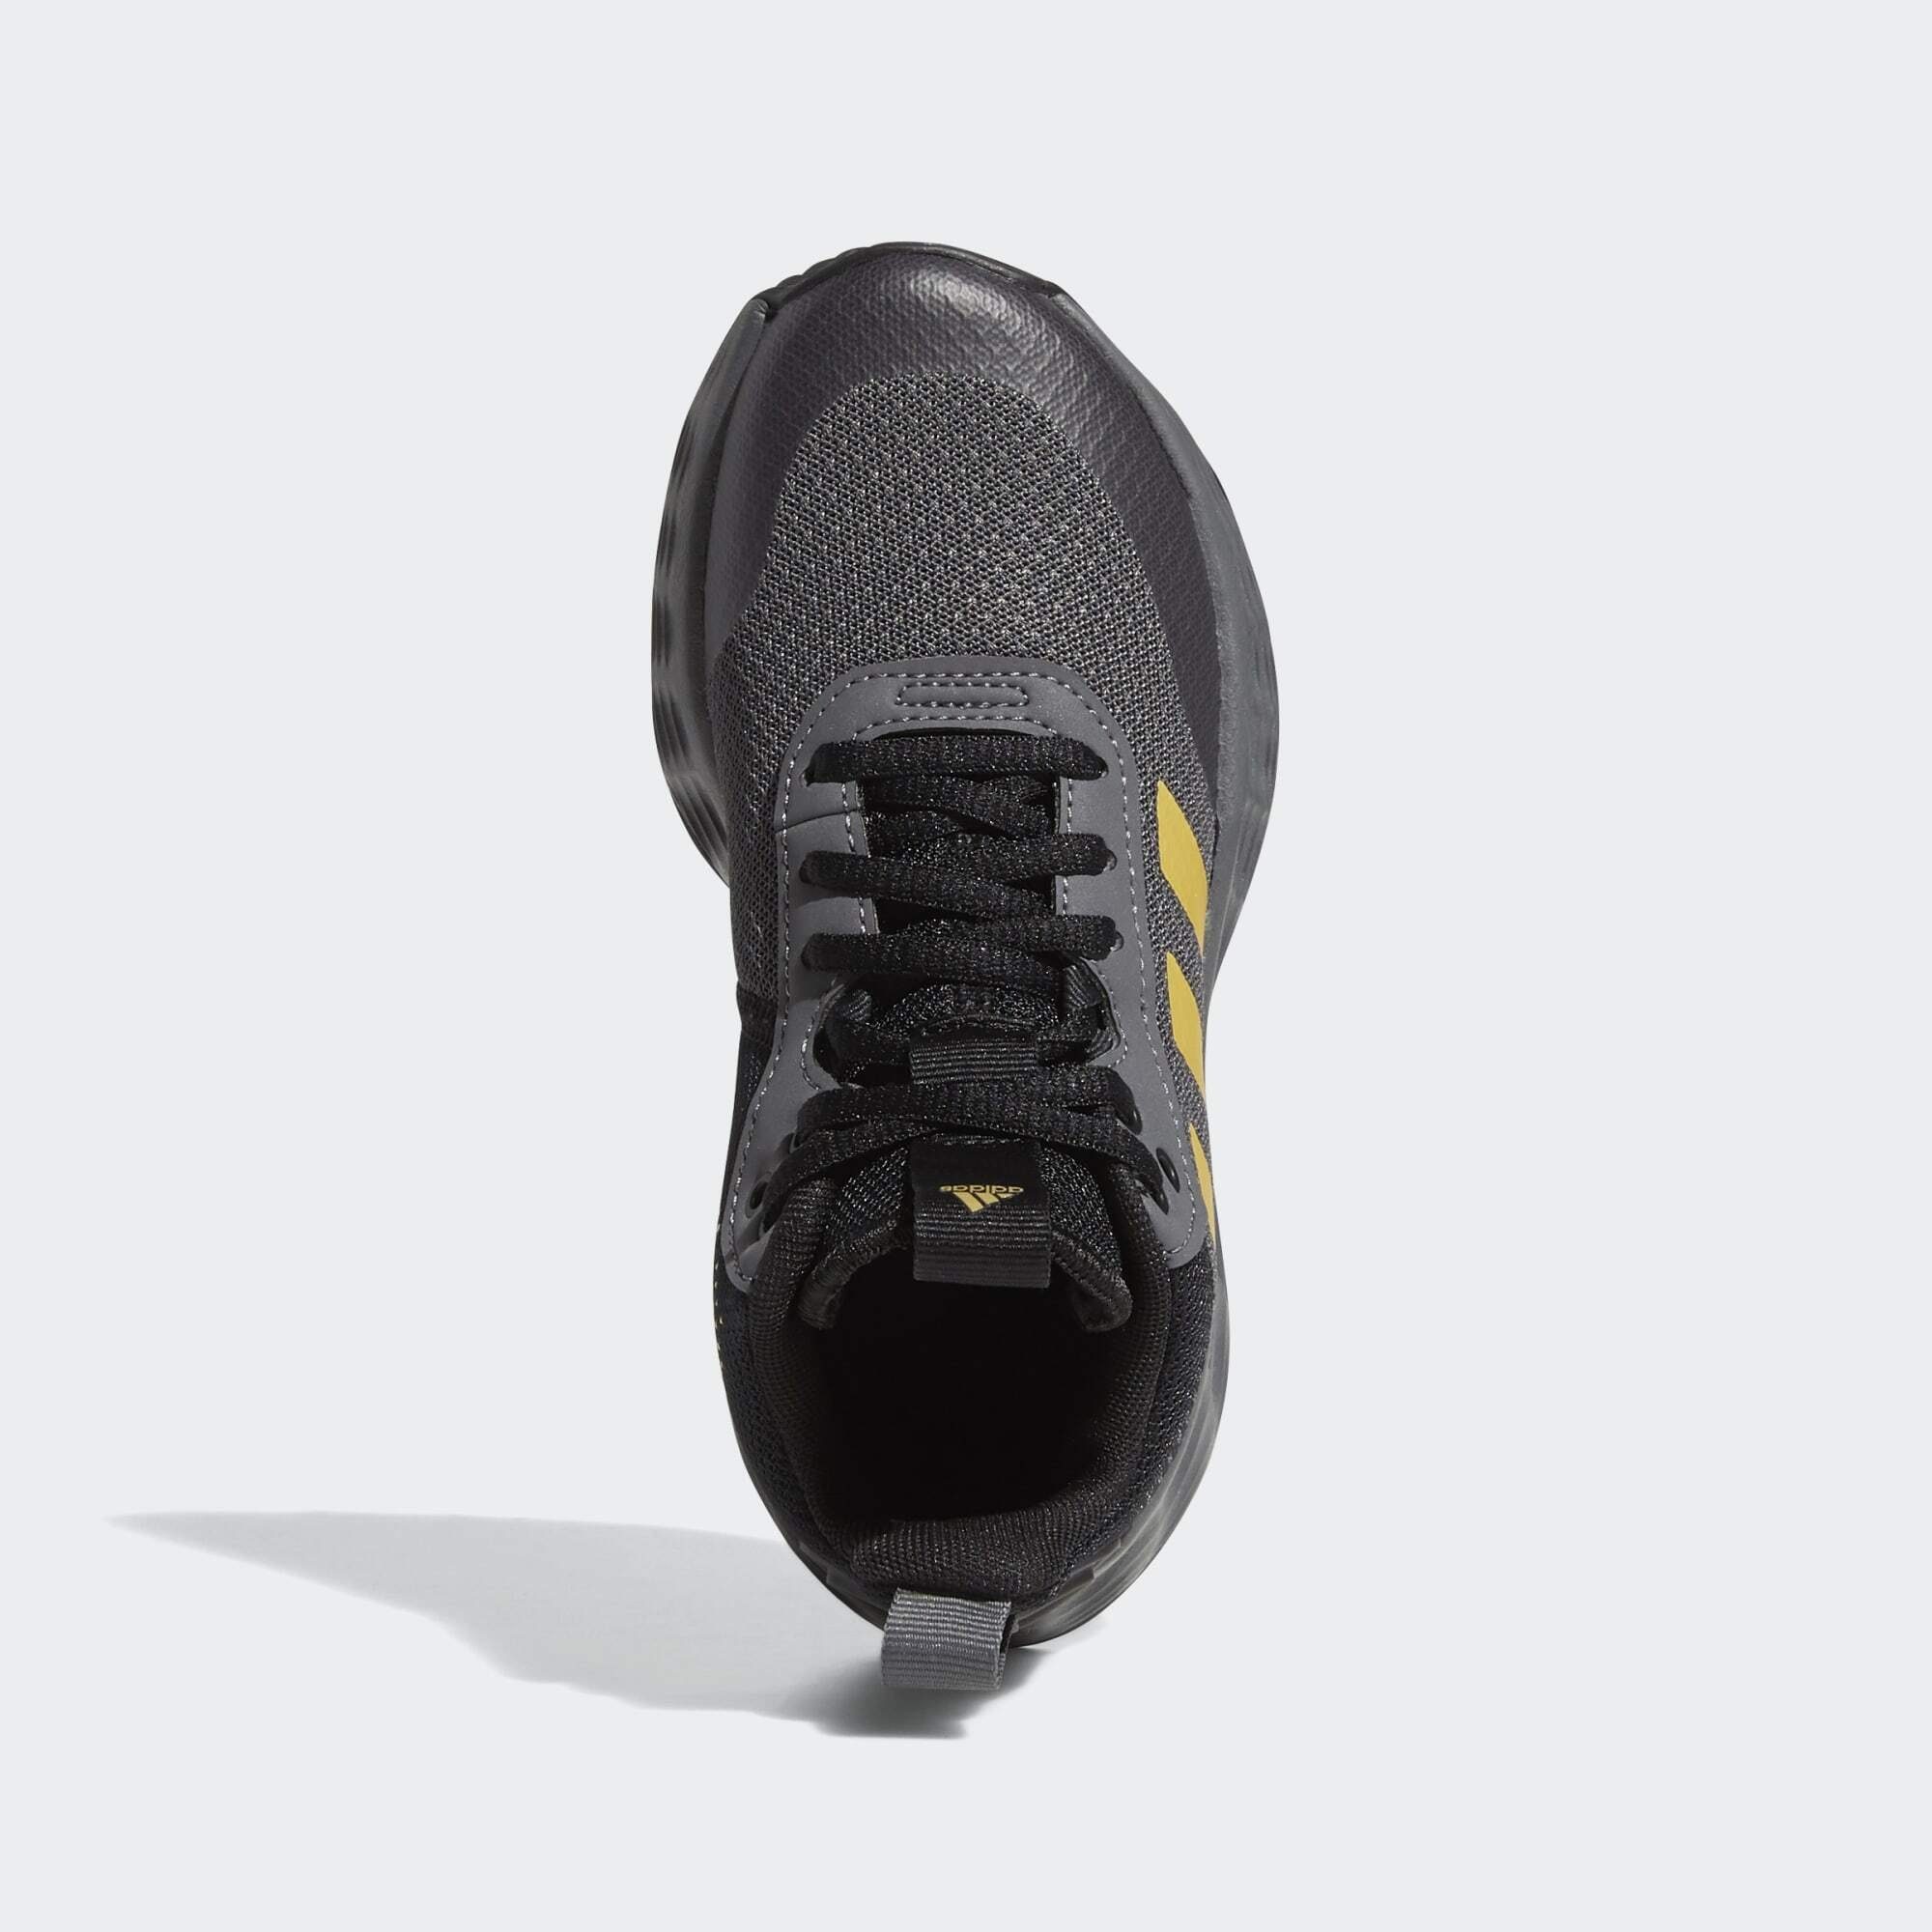 adidas Performance OWNTHEGAME Grey Gold BASKETBALLSCHUH / Basketballschuh Core Five Matte / 2.0 Black